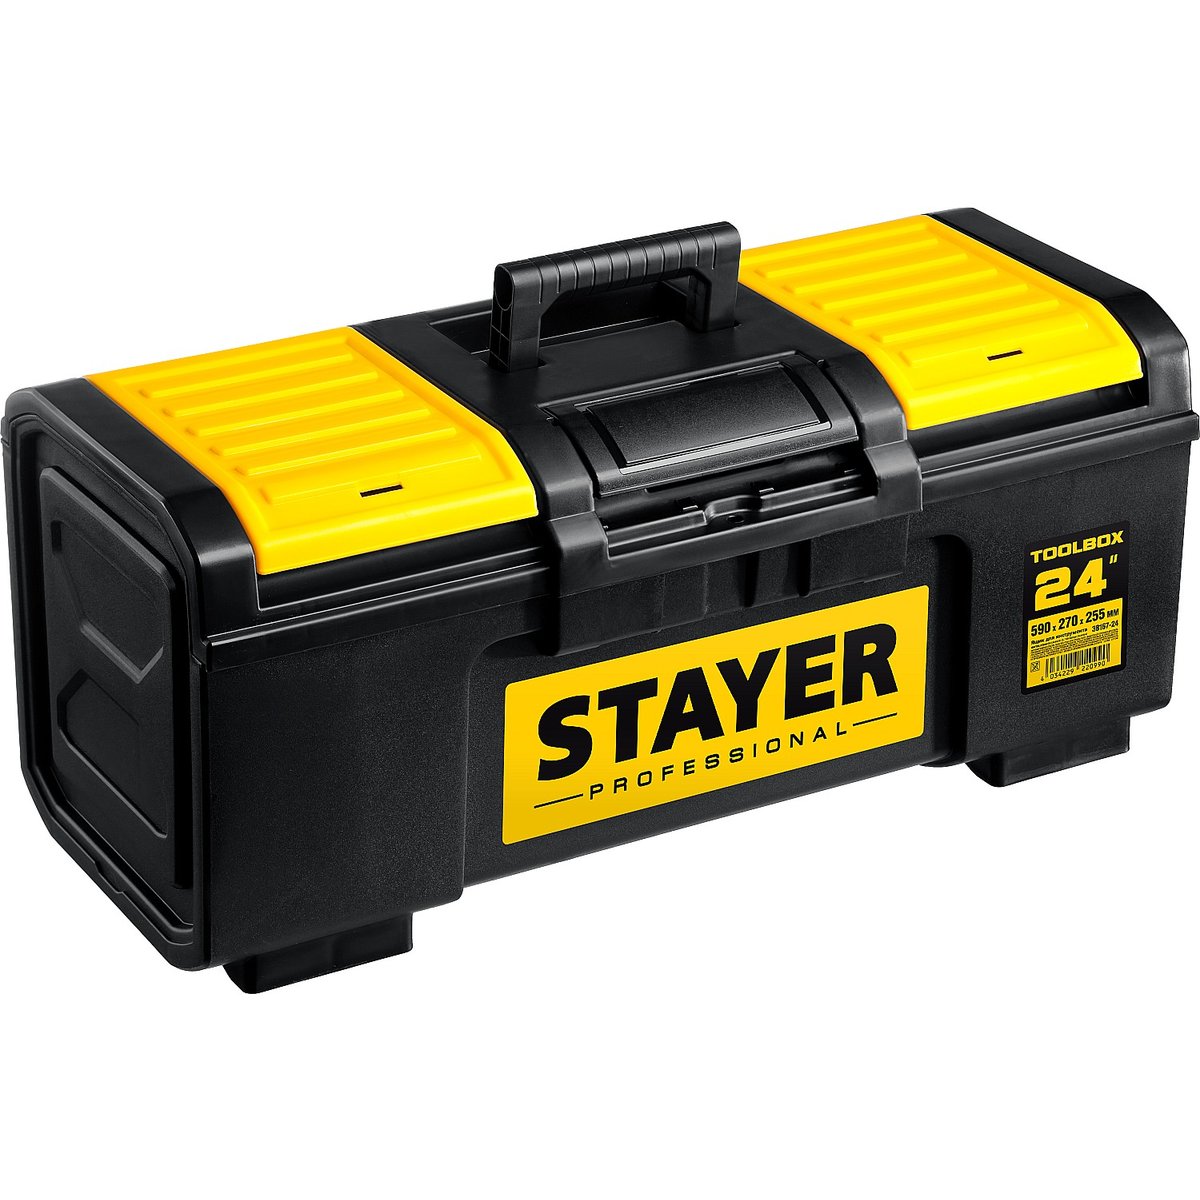 STAYER 590 х 270 х 255, пластиковый, ящик для инструмента TOOLBOX-24 38167-24 Professional